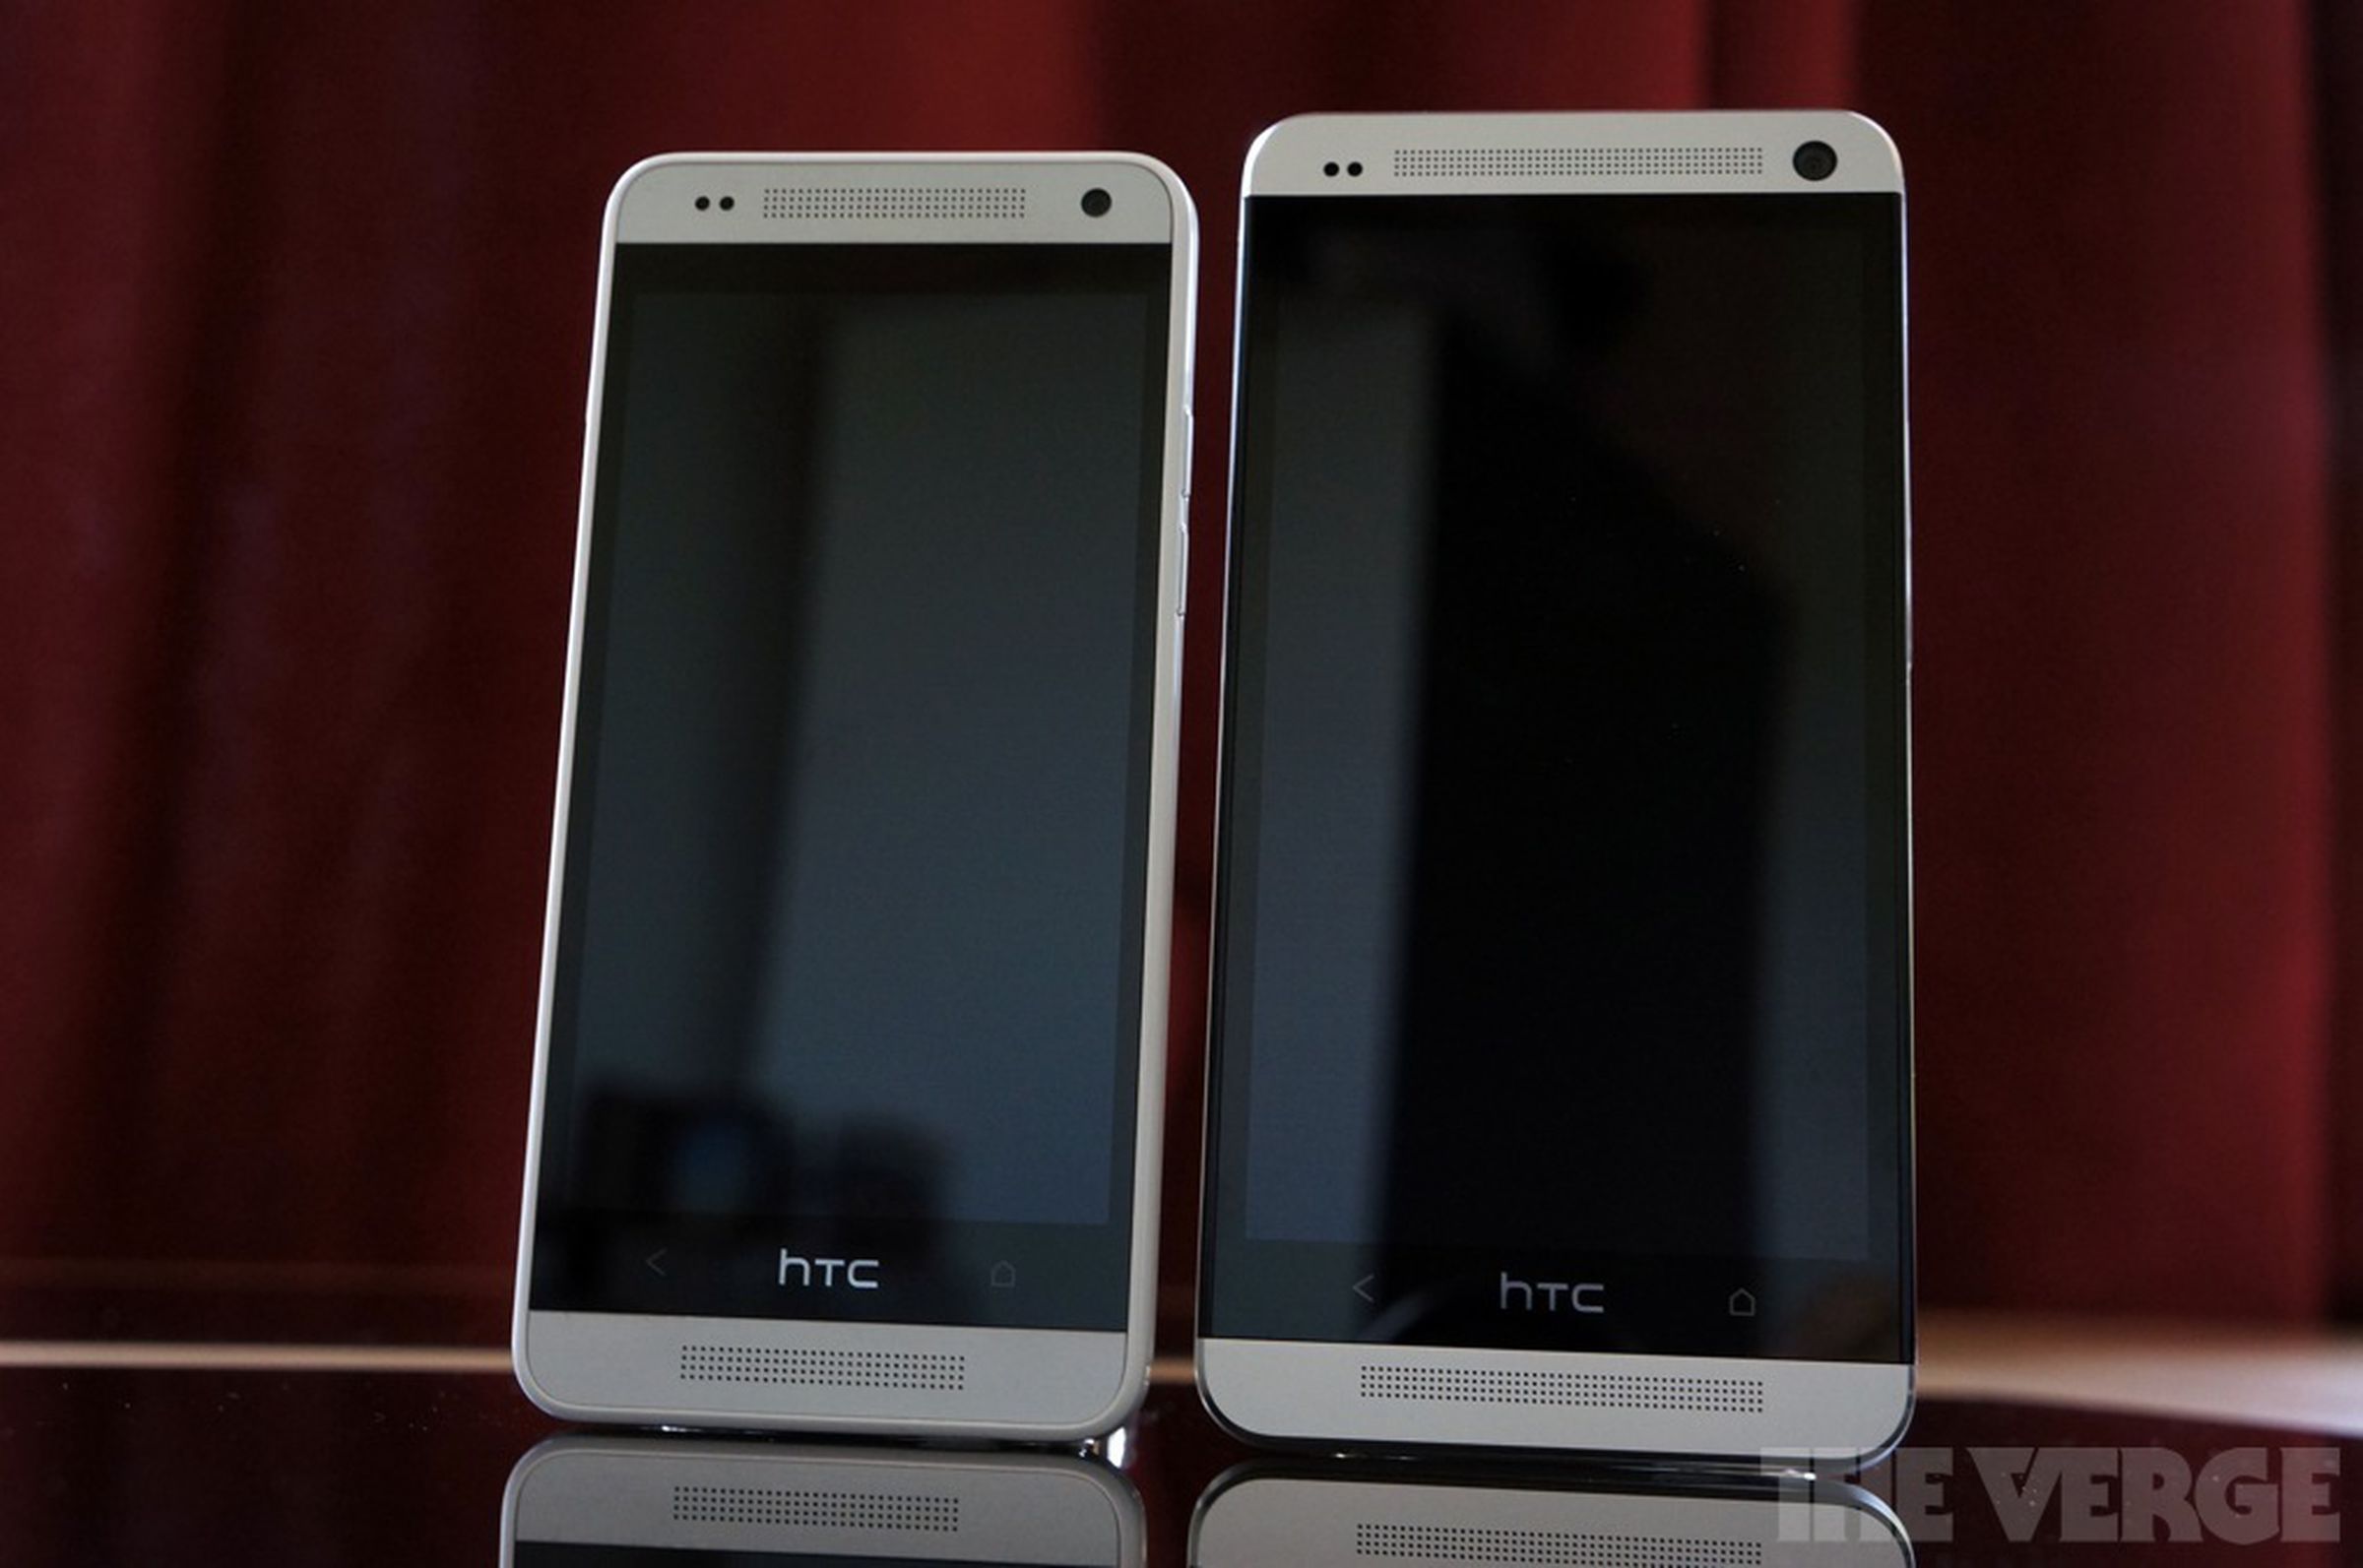 HTC One mini vs. HTC One photo gallery